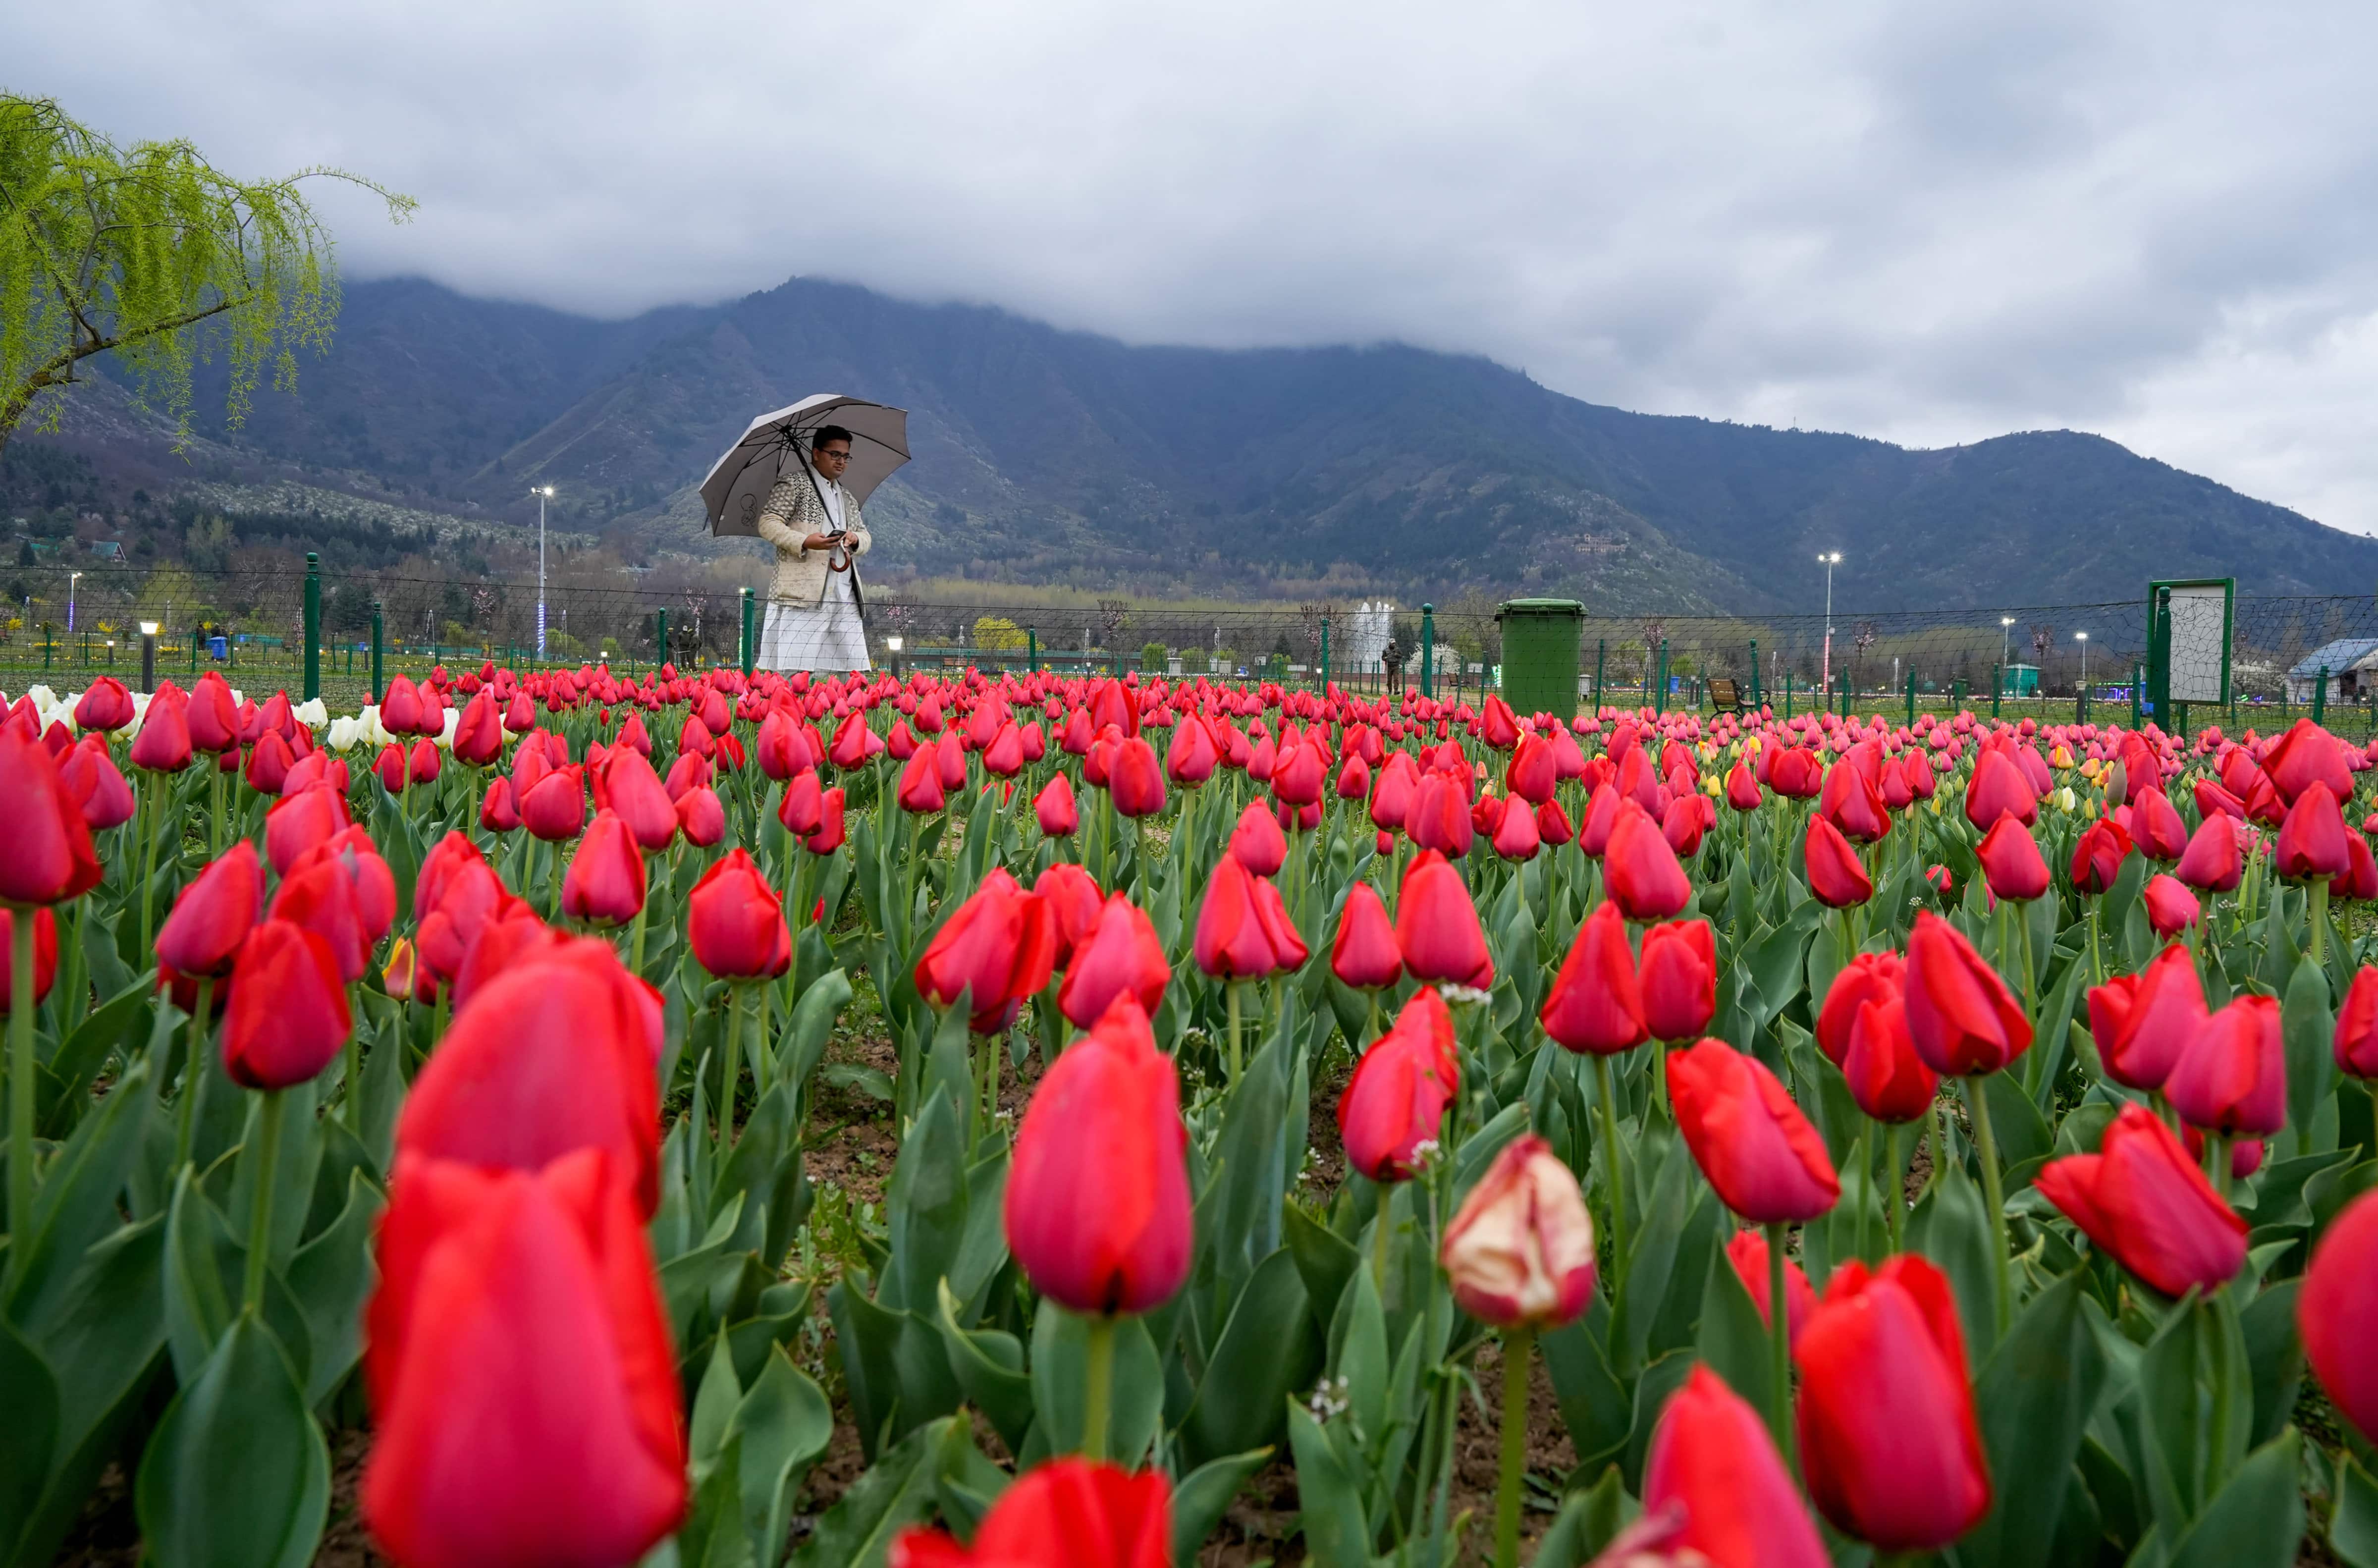 Kashmir Tulip Garden opens Asia's largest garden of tulips, spring